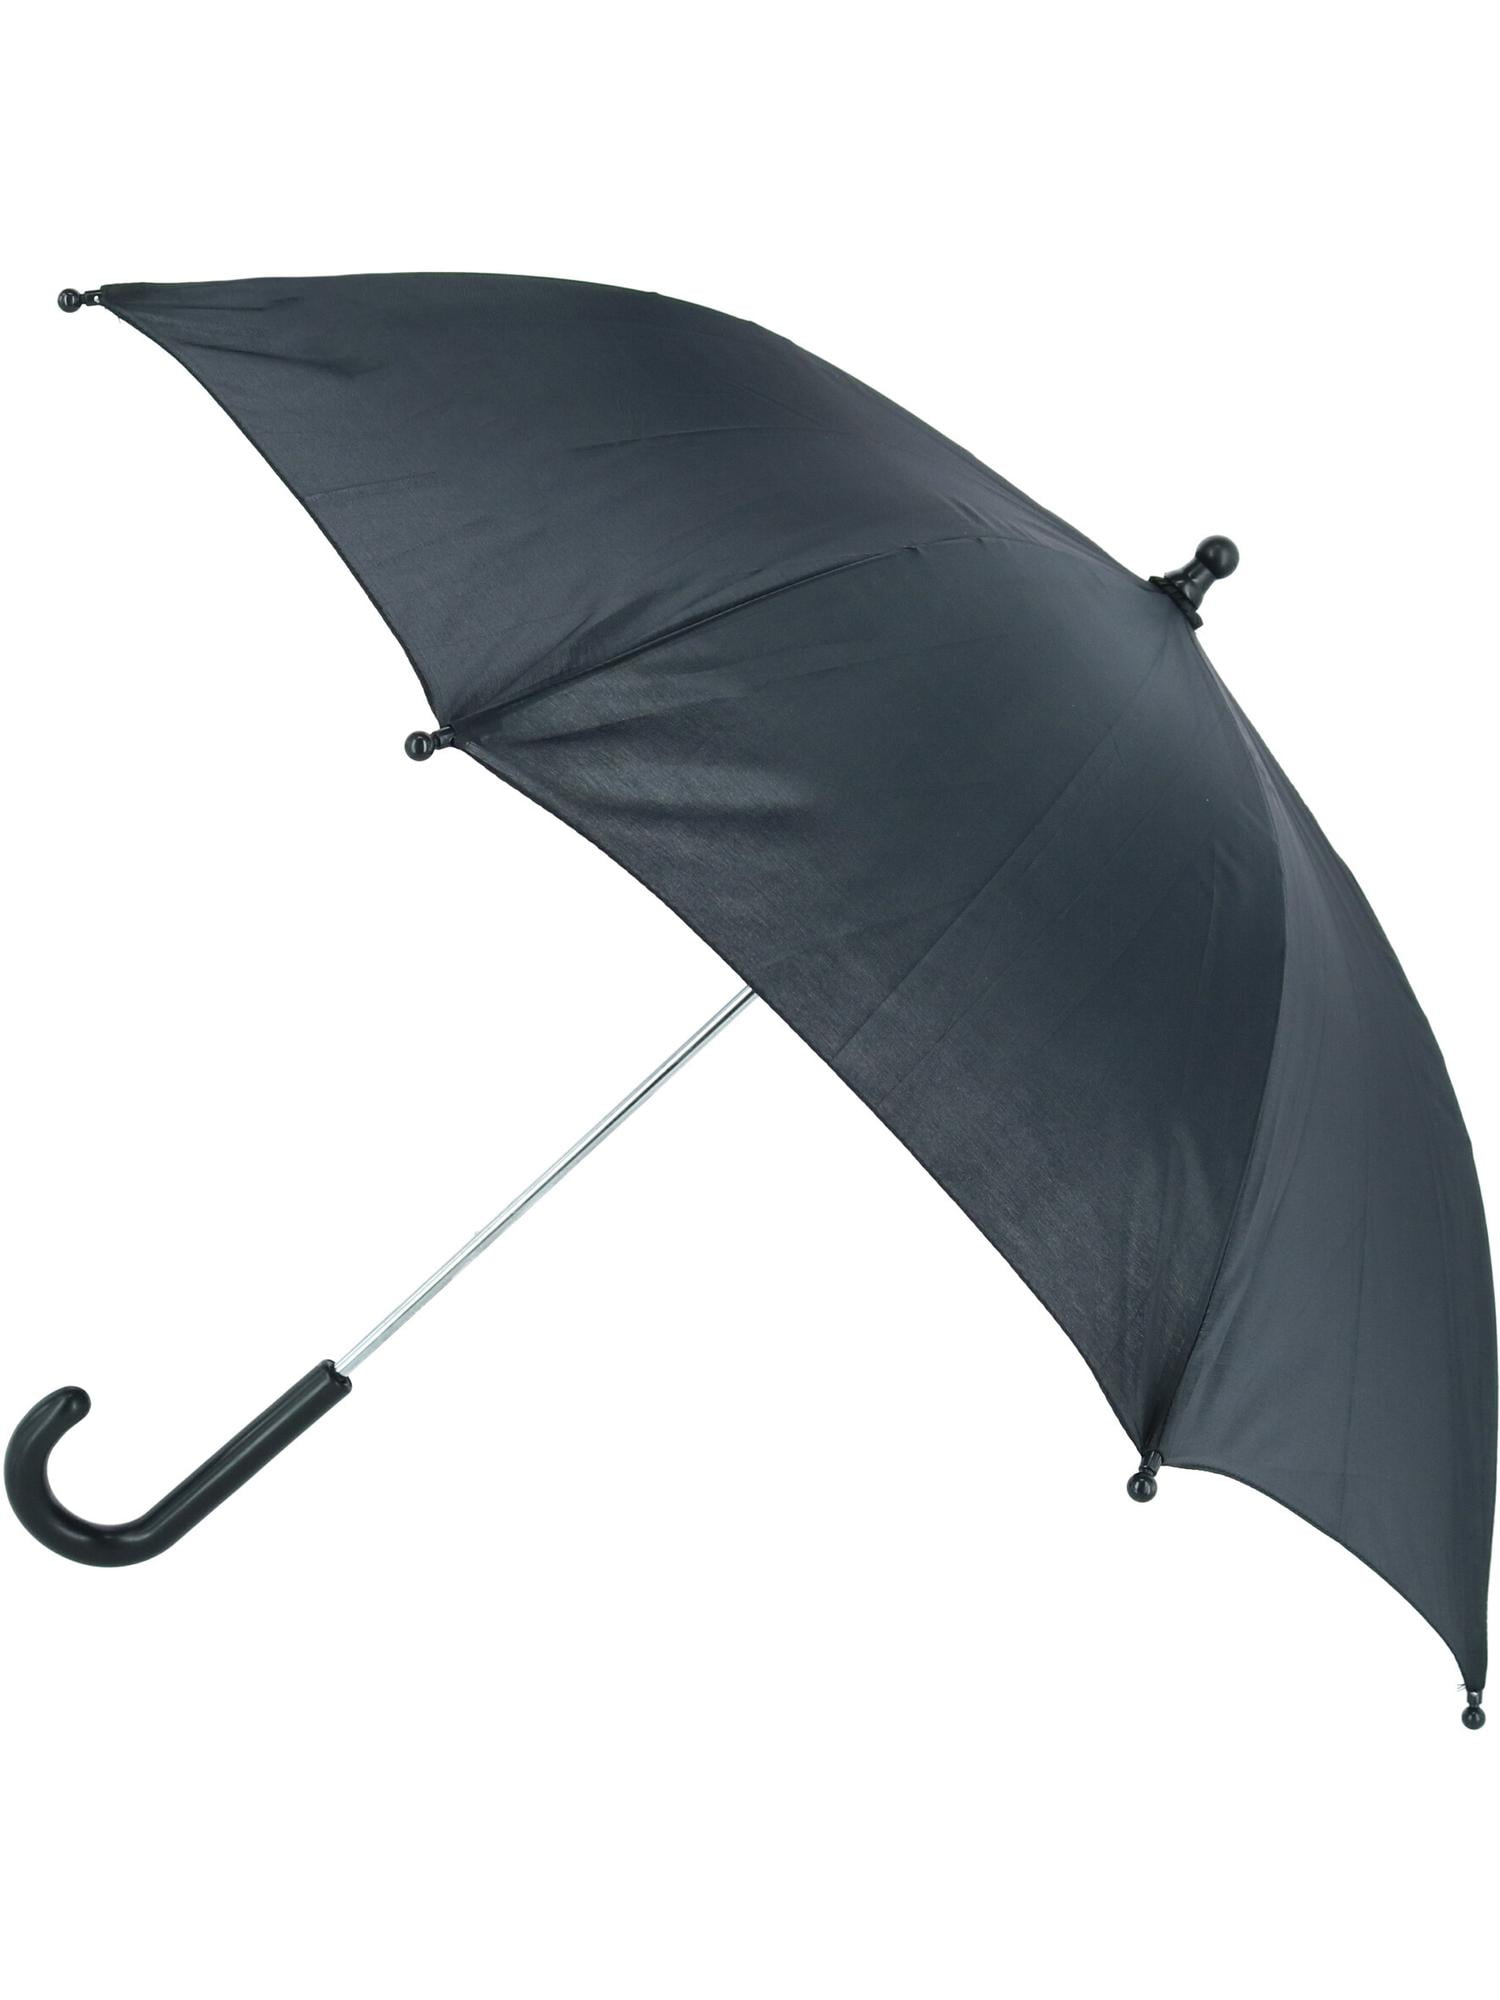 iRain Kid's Solid Color Stick Umbrella with Hook Handle 